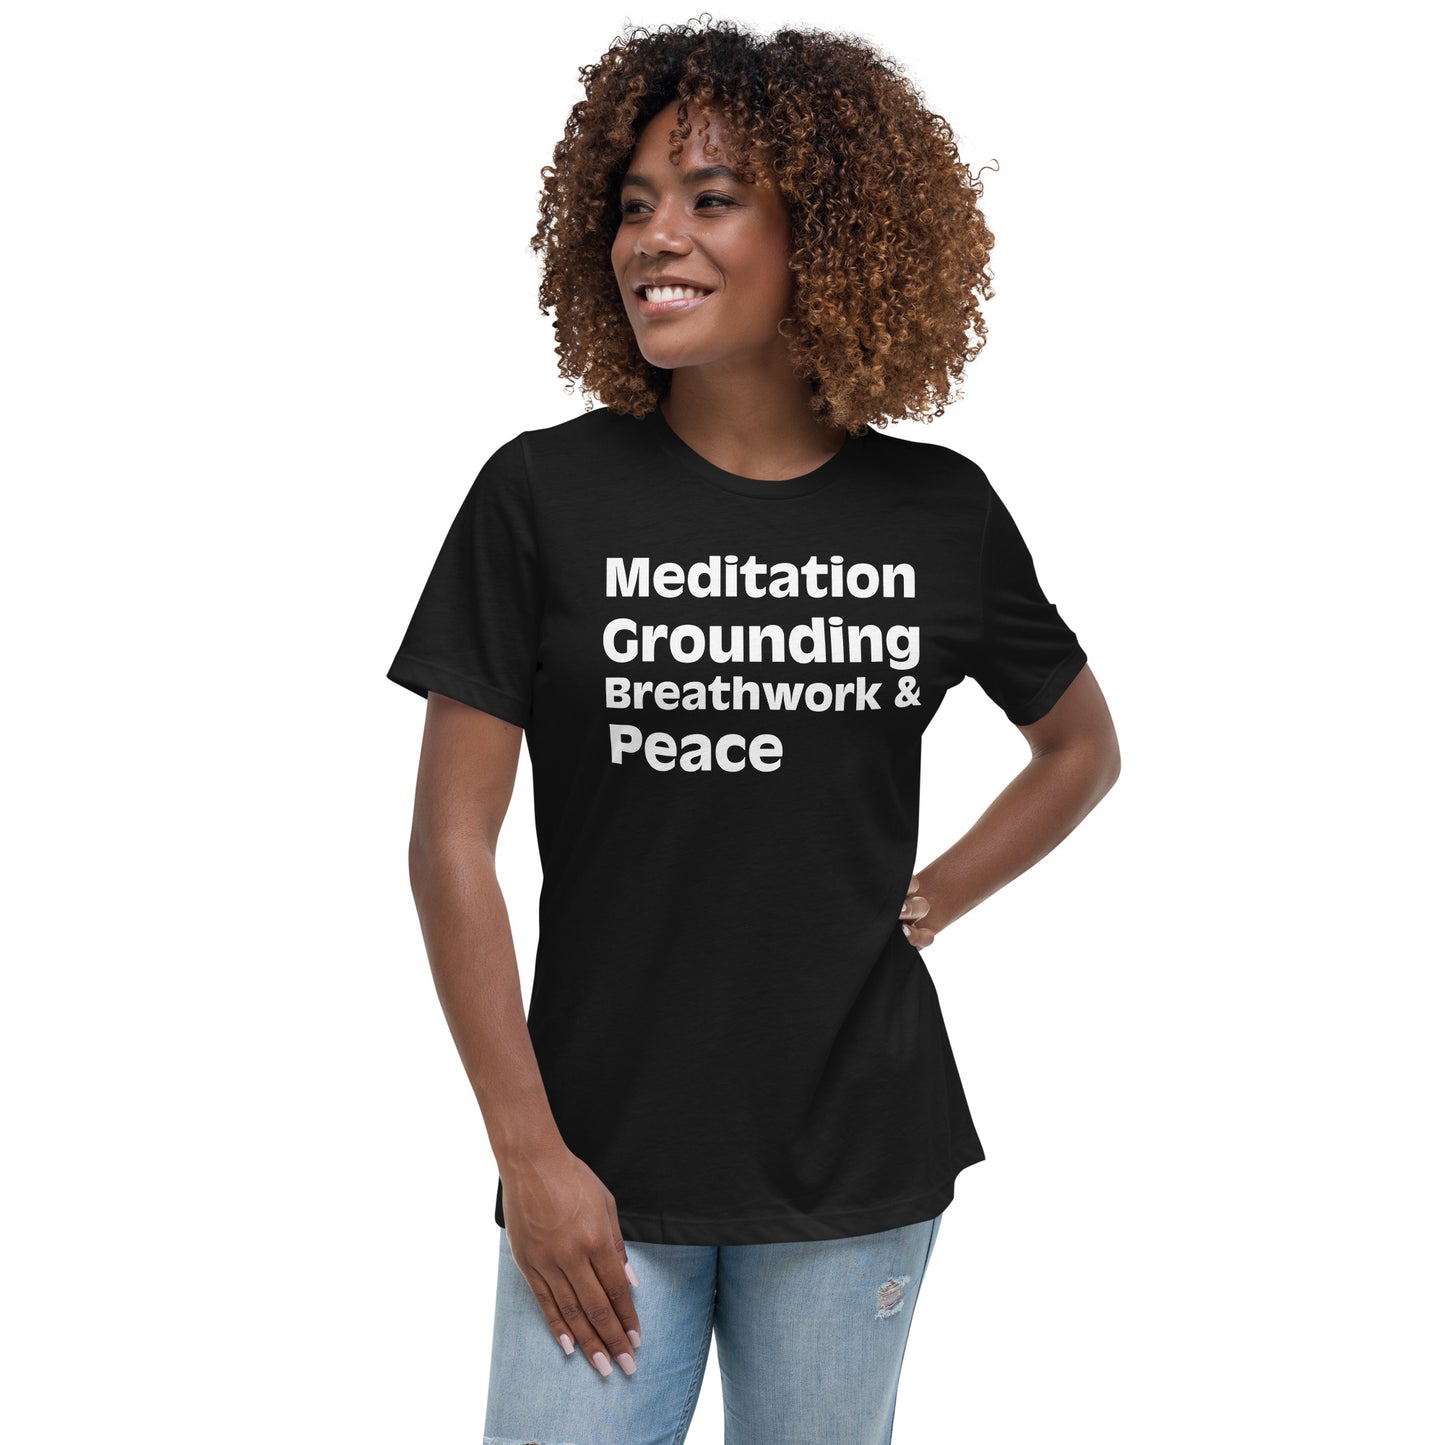 Meditation Grounding Breathwork & Peace tshirt